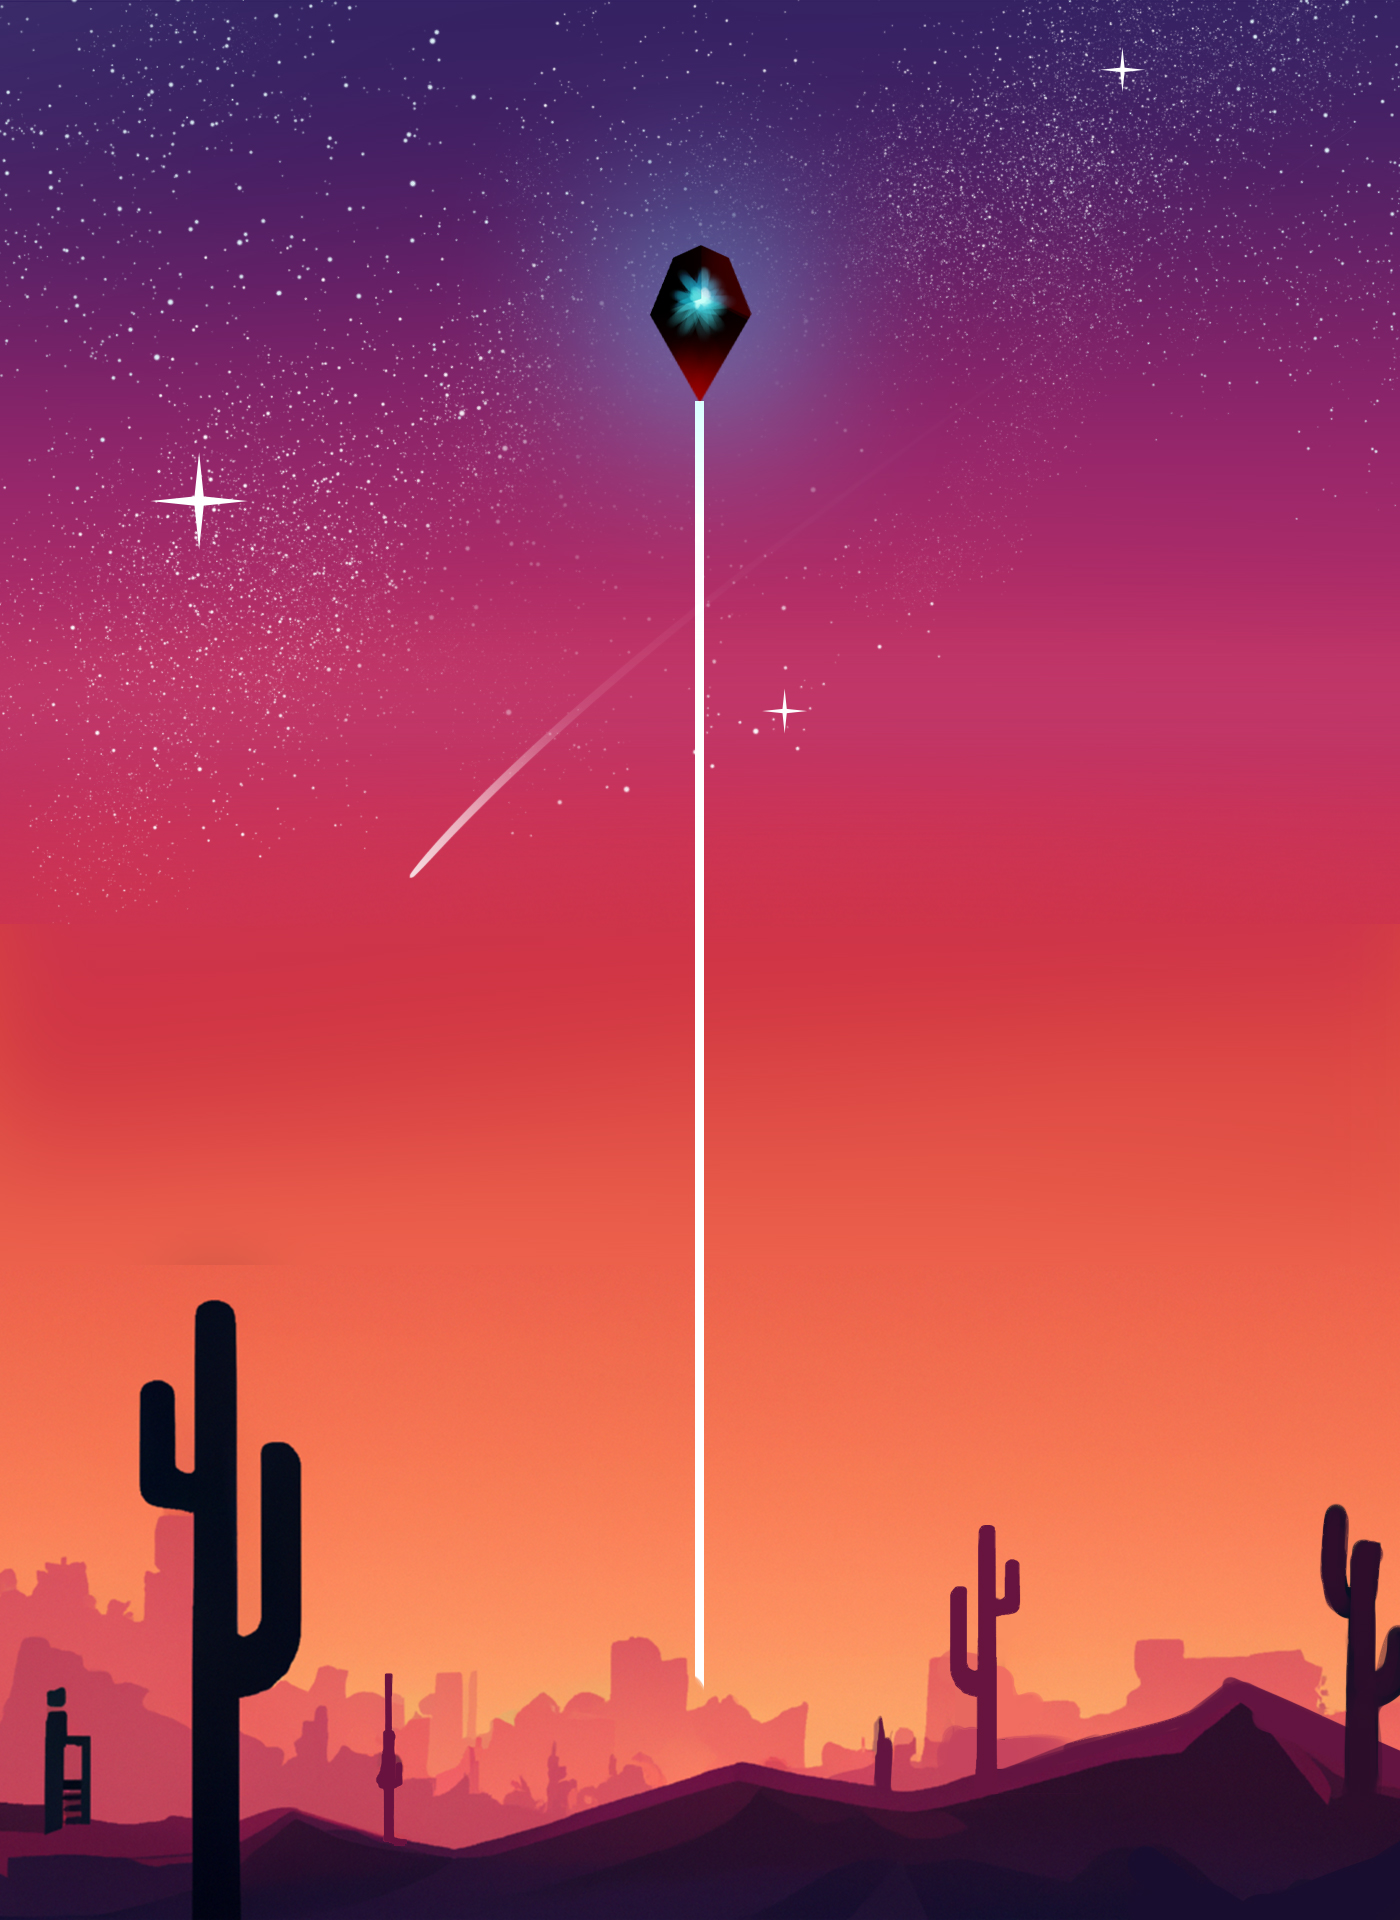 General 1400x1920 No Man's Sky science fiction desert cactus meteorite stars simple background portrait display gradient evening video games